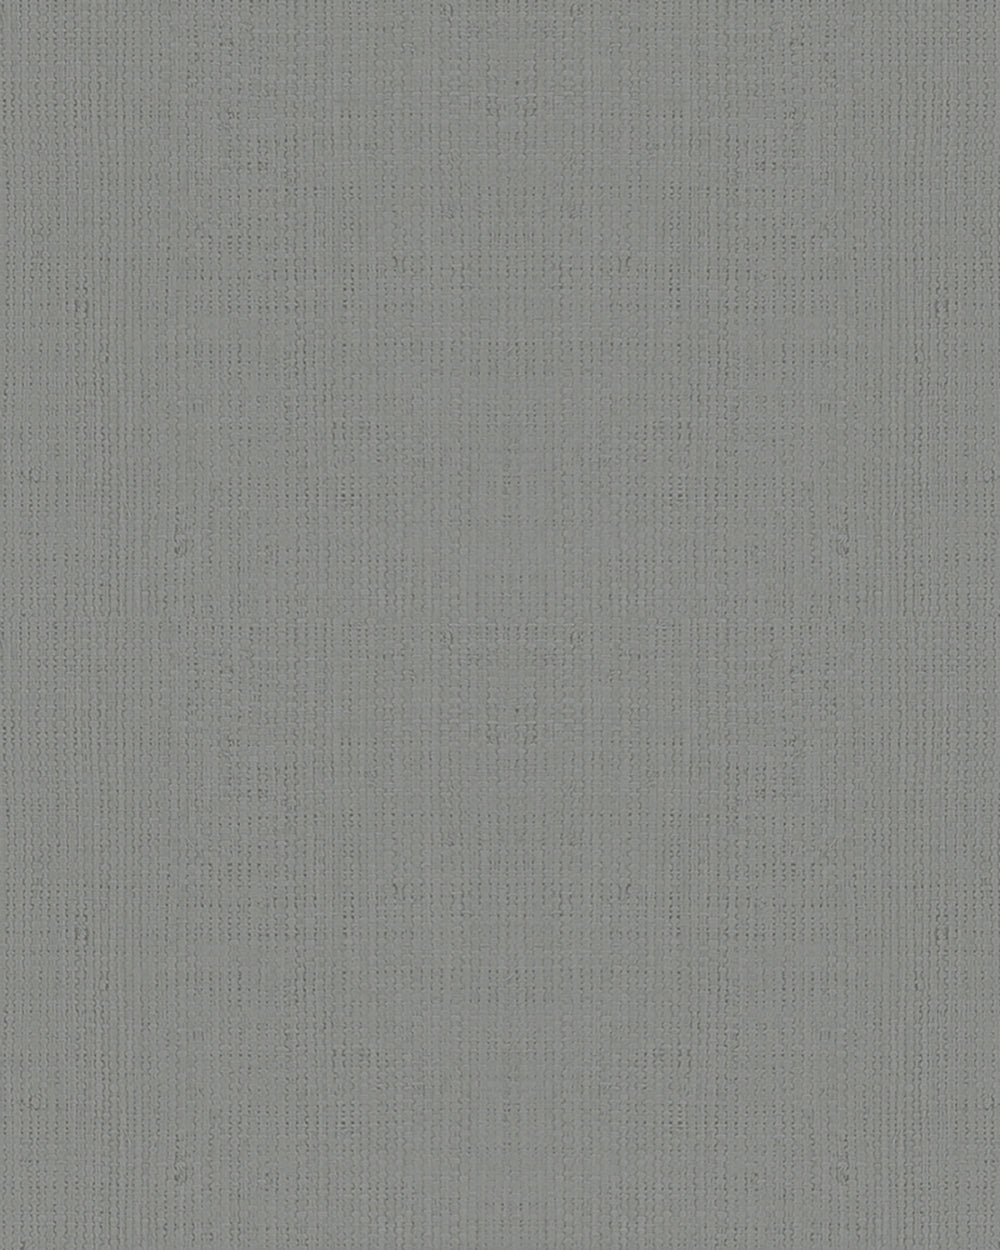 Casual - Textured Rattan Plains plain wallpaper Marburg Roll Grey  30449